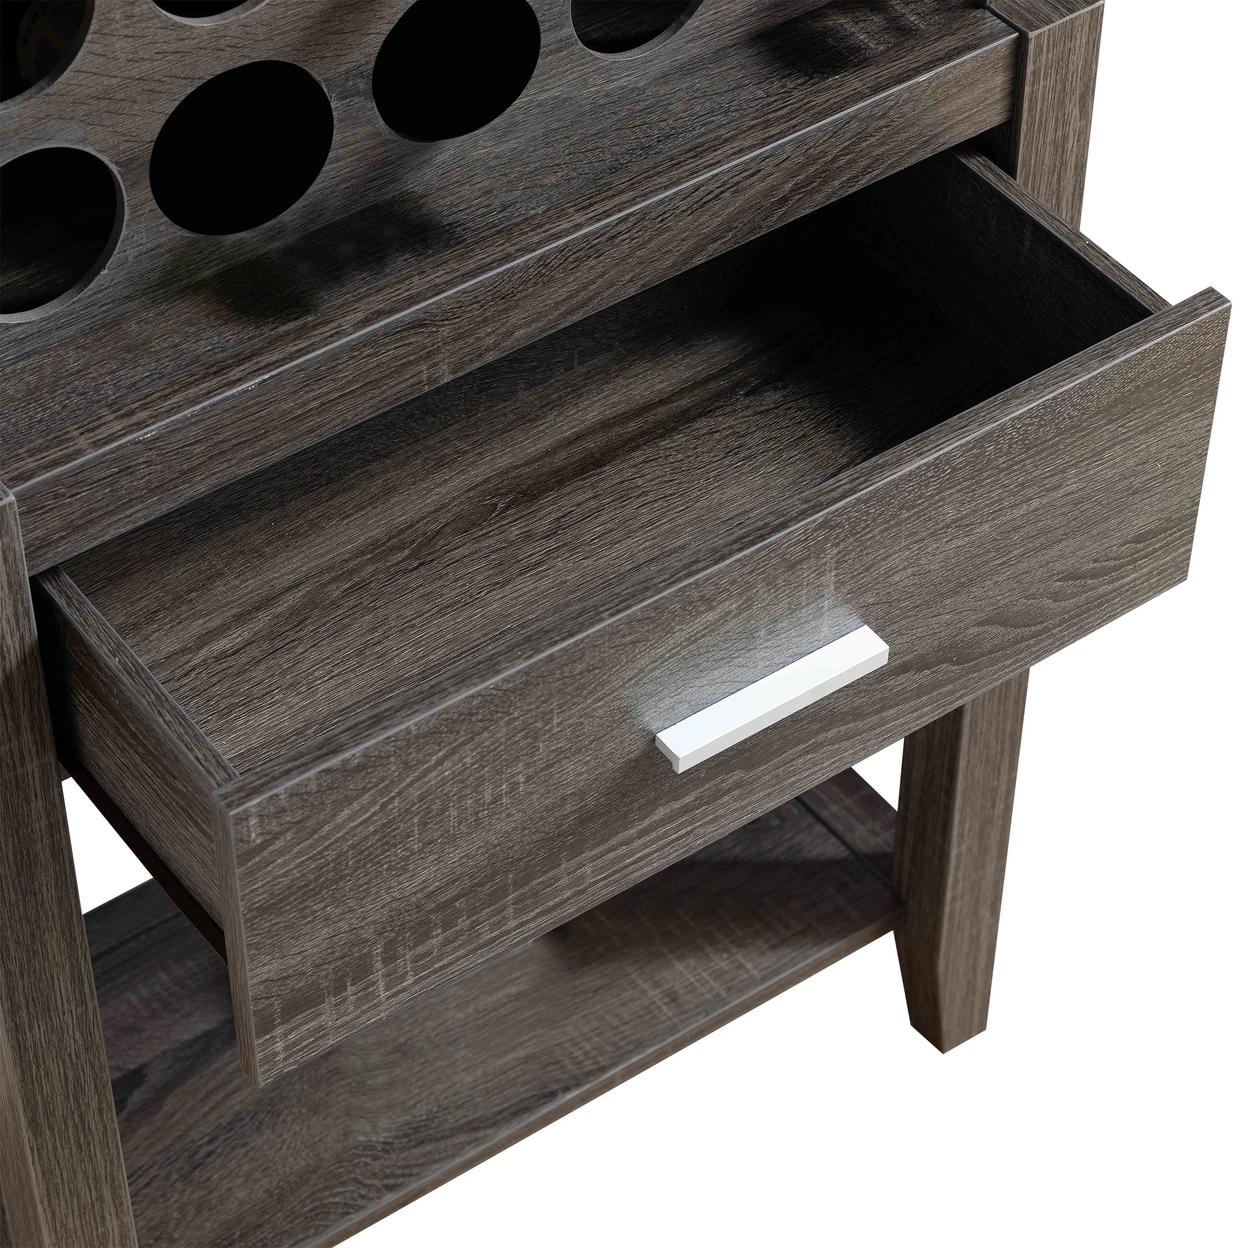 66 Inch Wine Cabinet With 3 Shelves, Bottle Rack, Distressed Gray Finish- Saltoro Sherpi